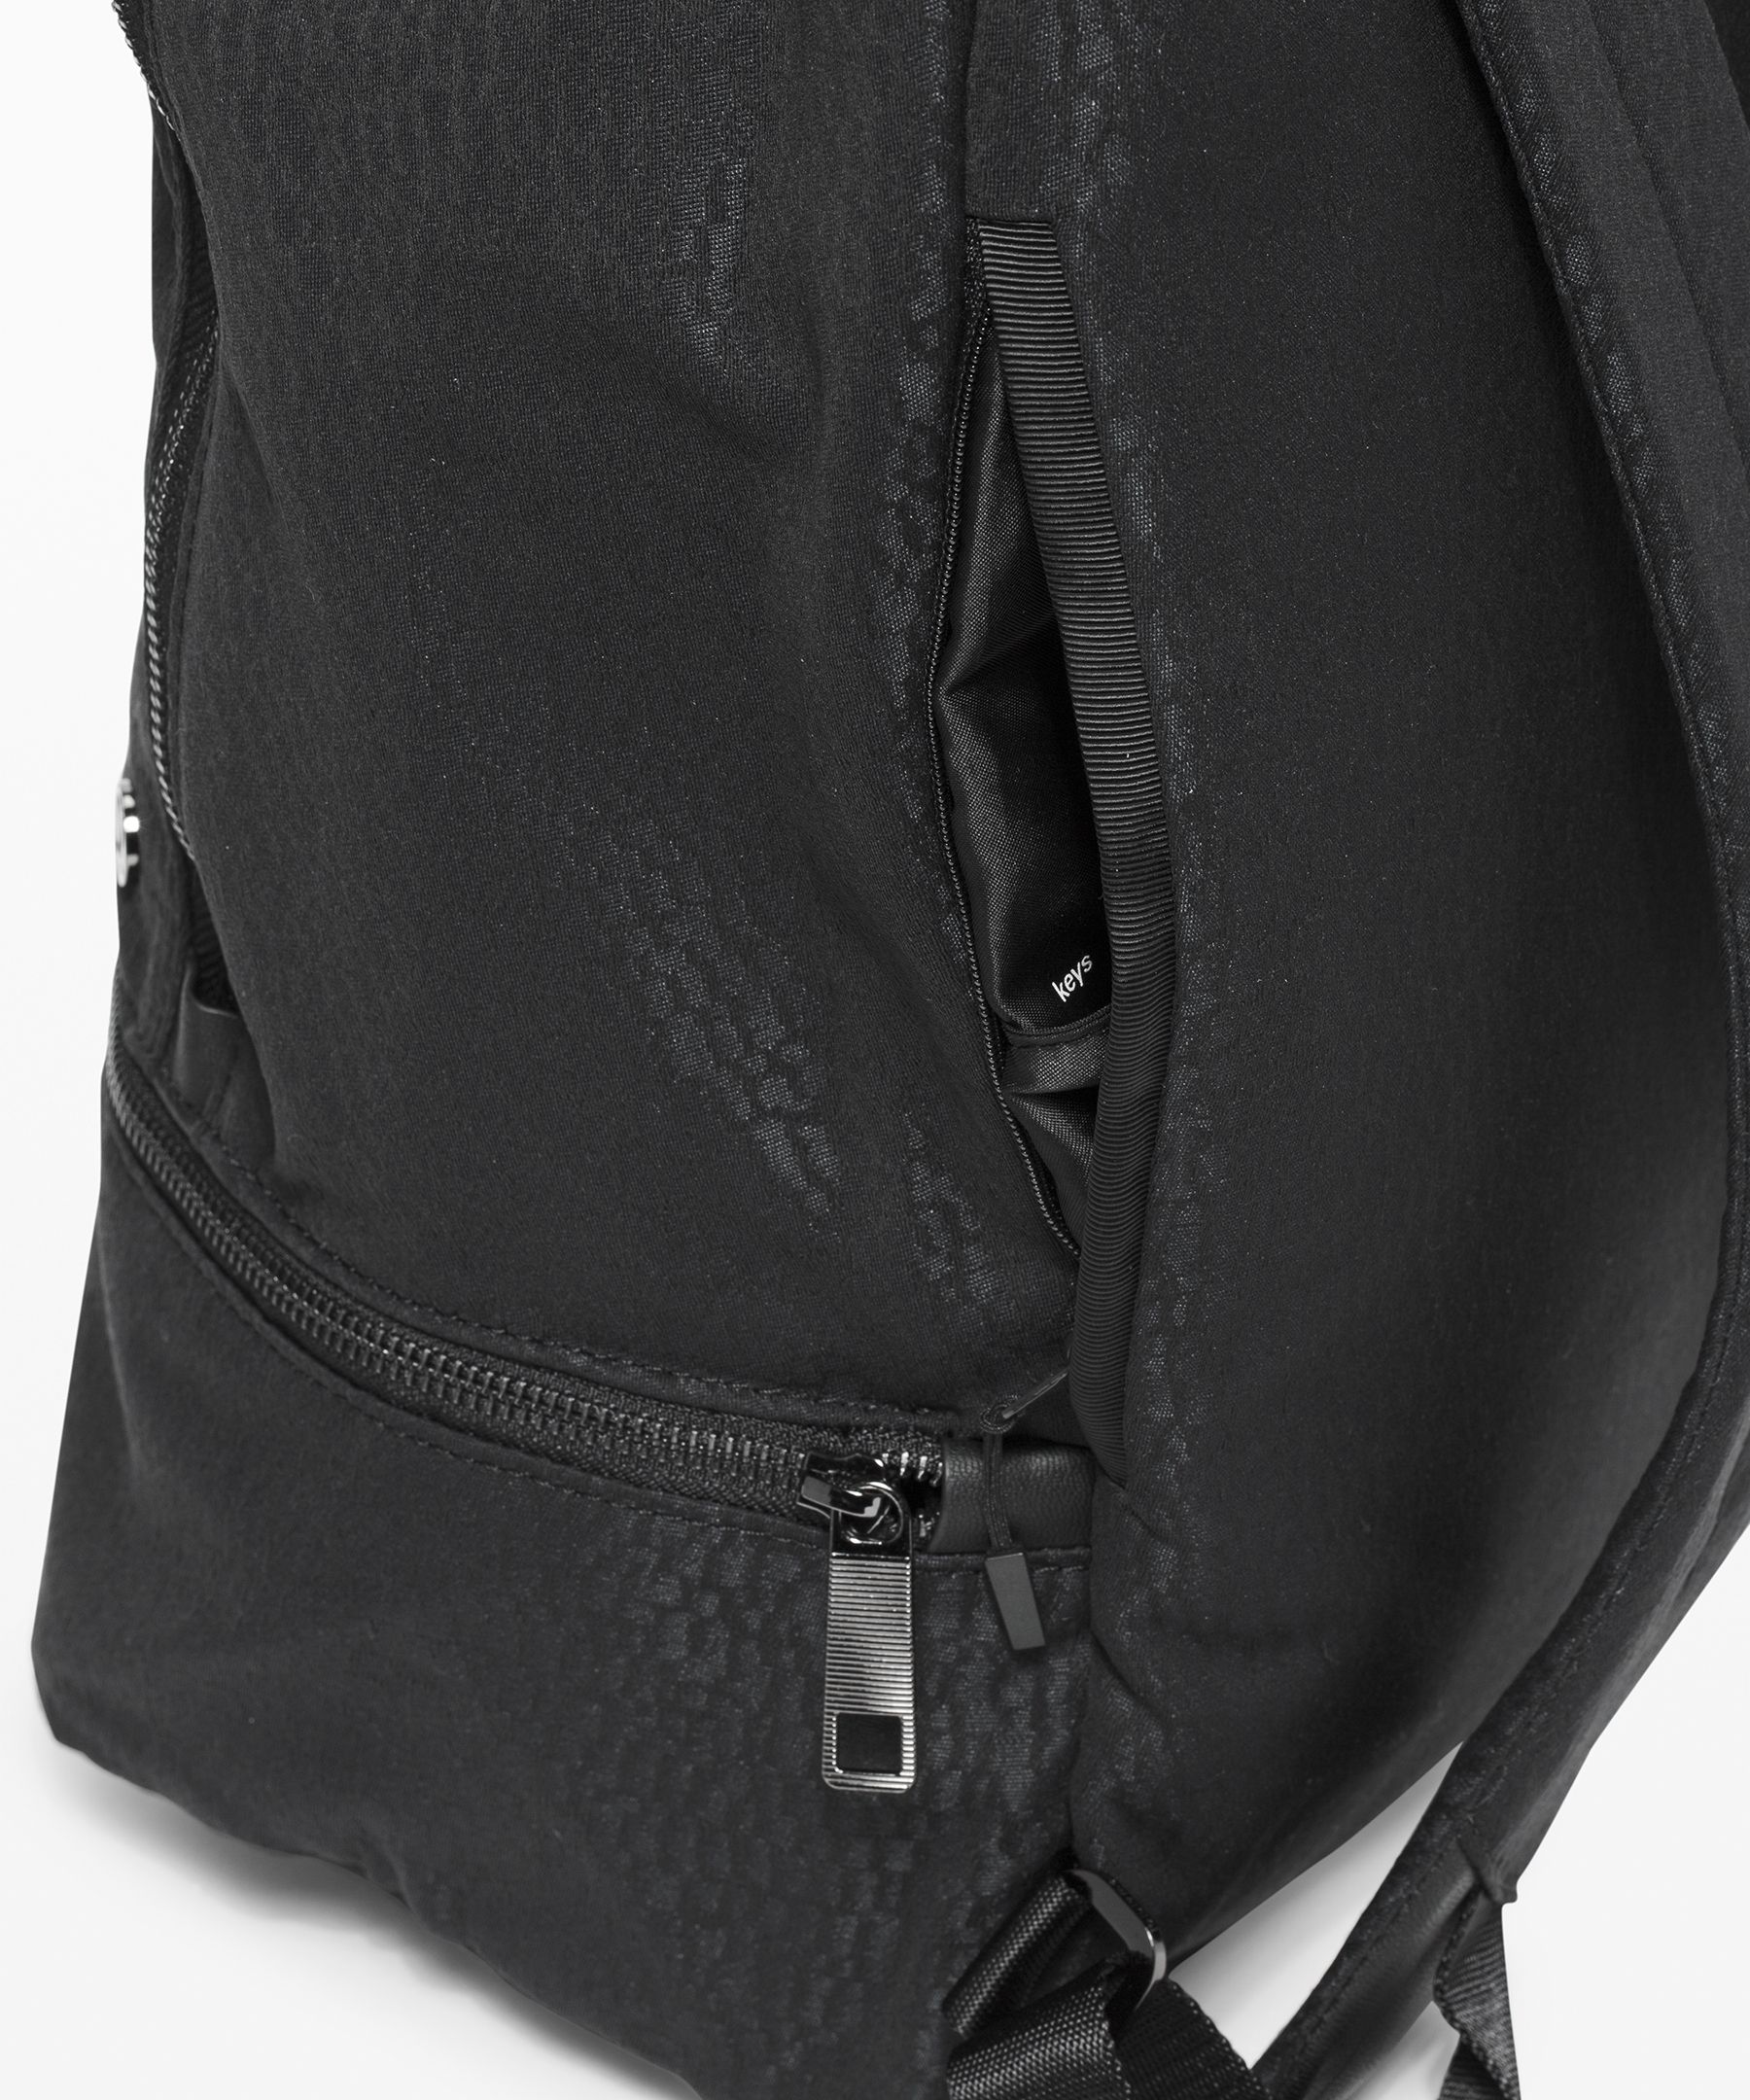 black backpack lululemon